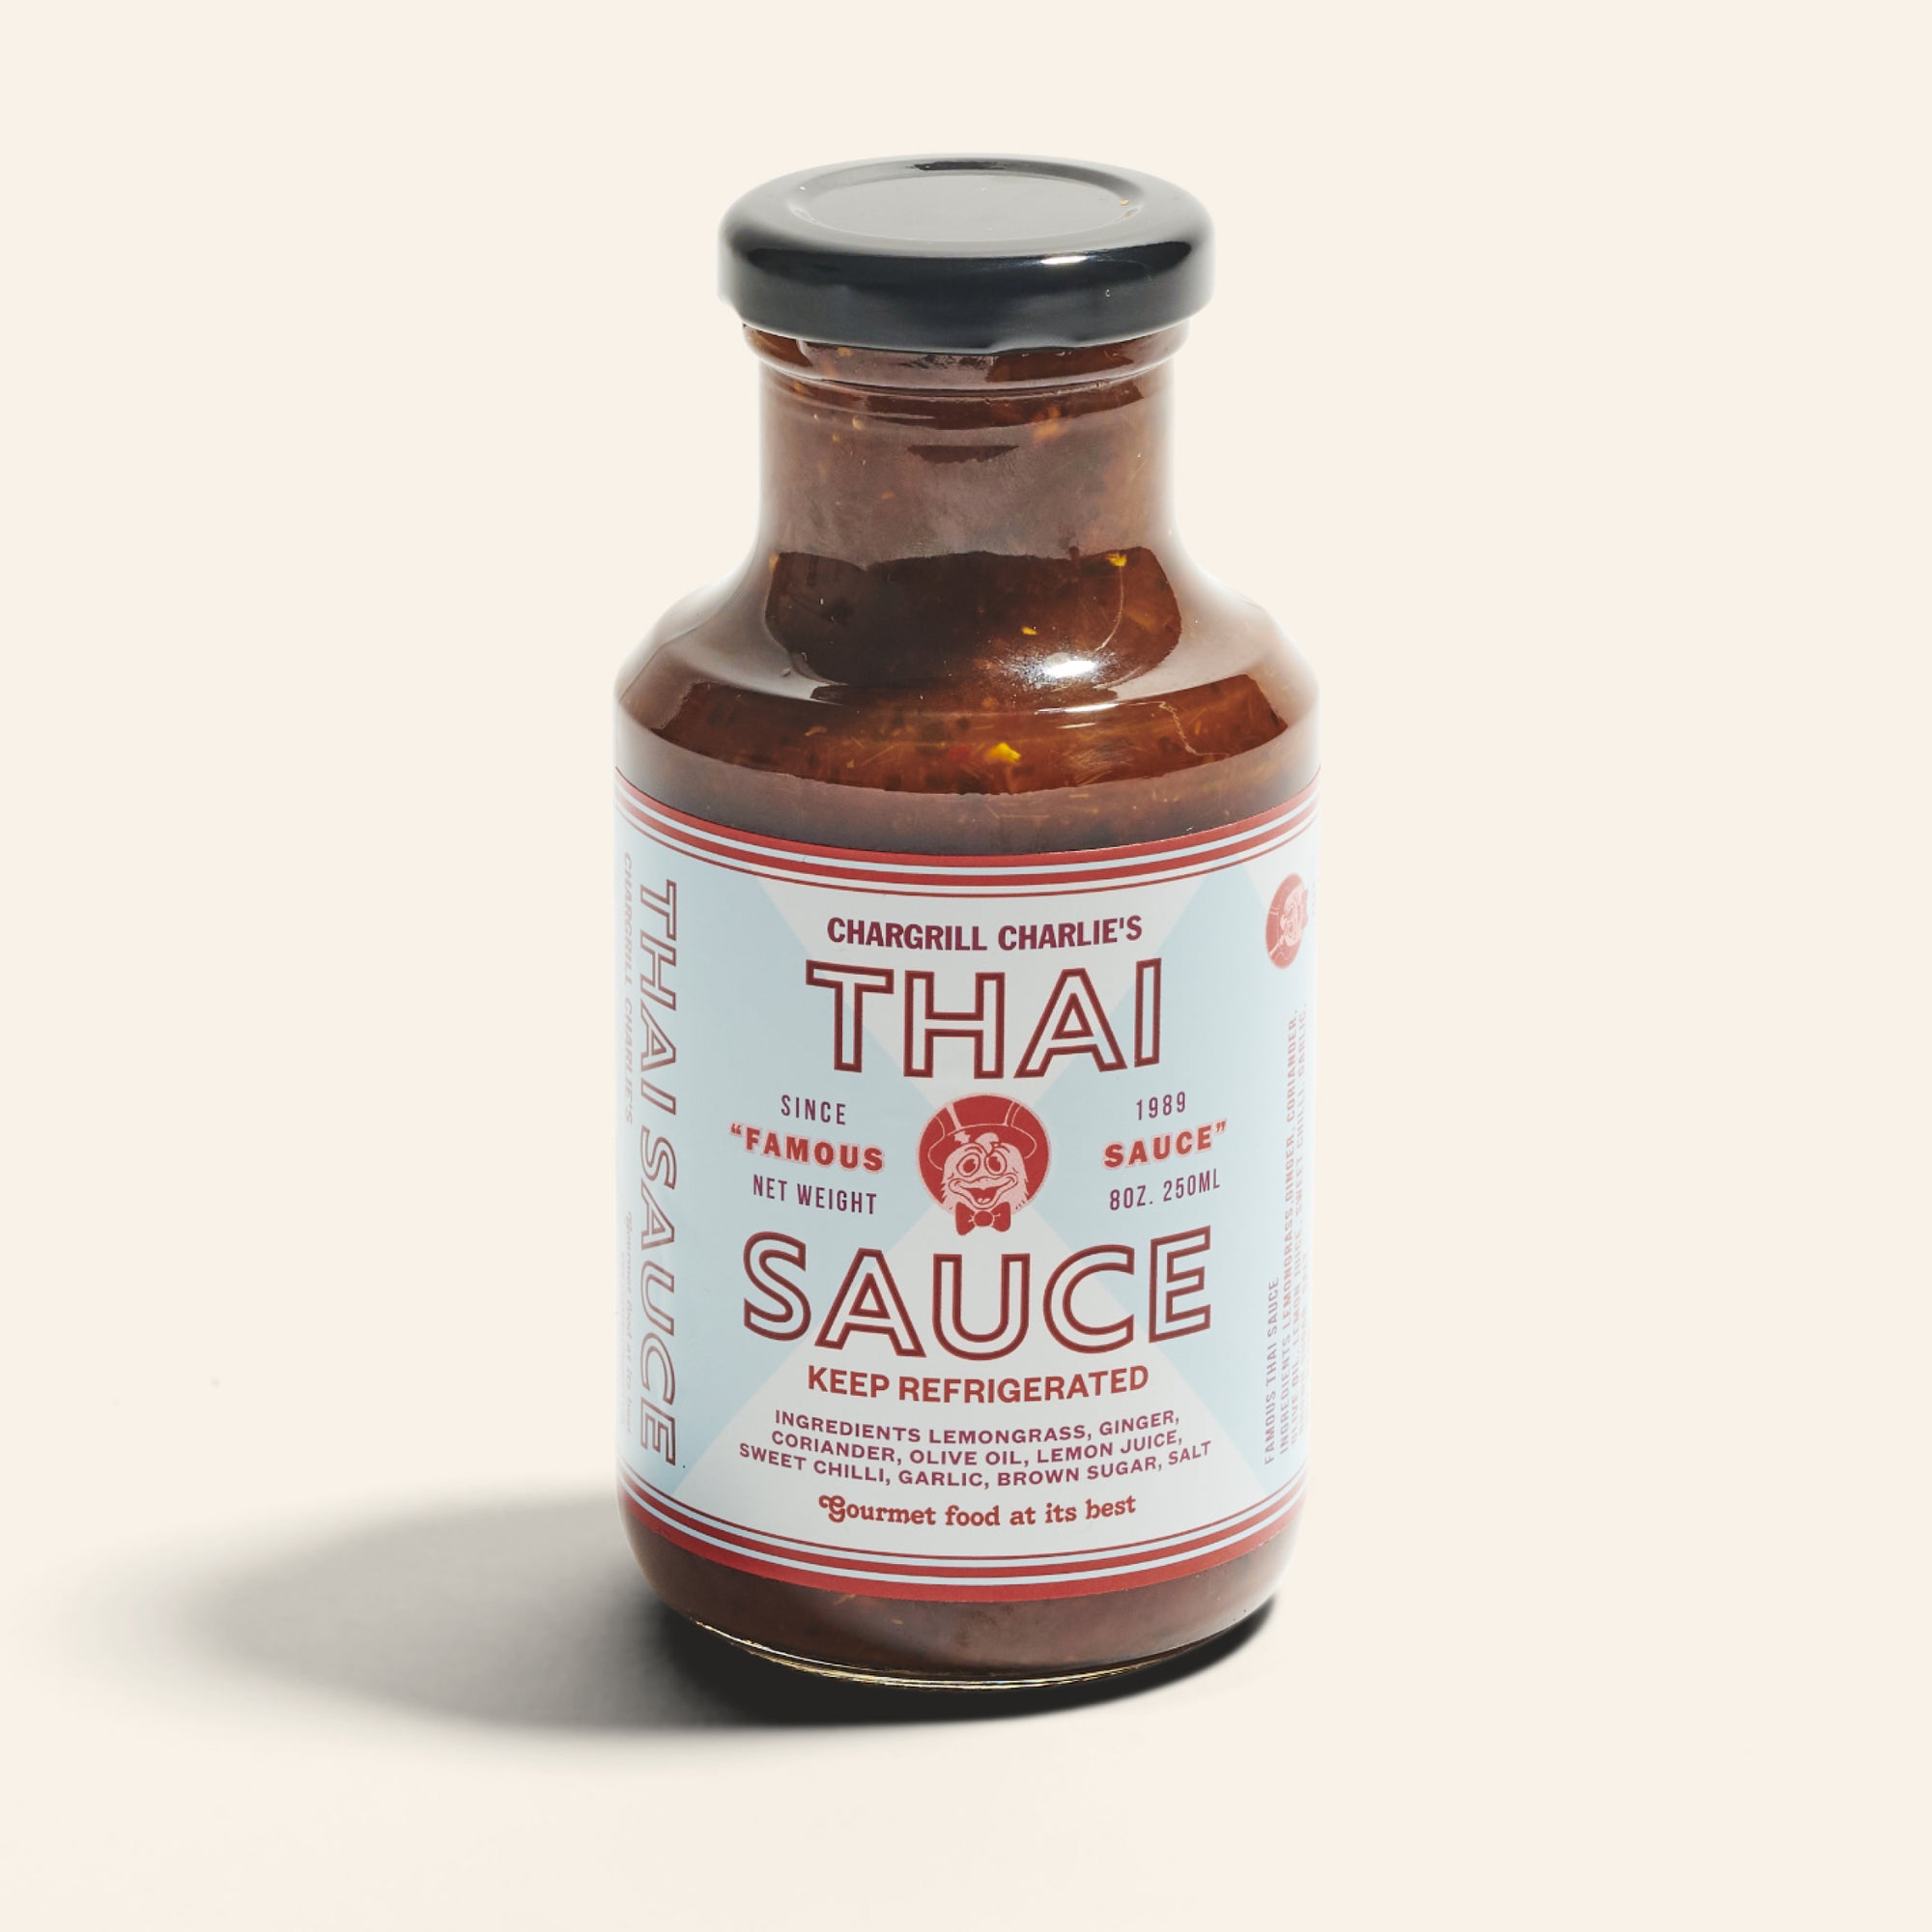 Thai Sauce